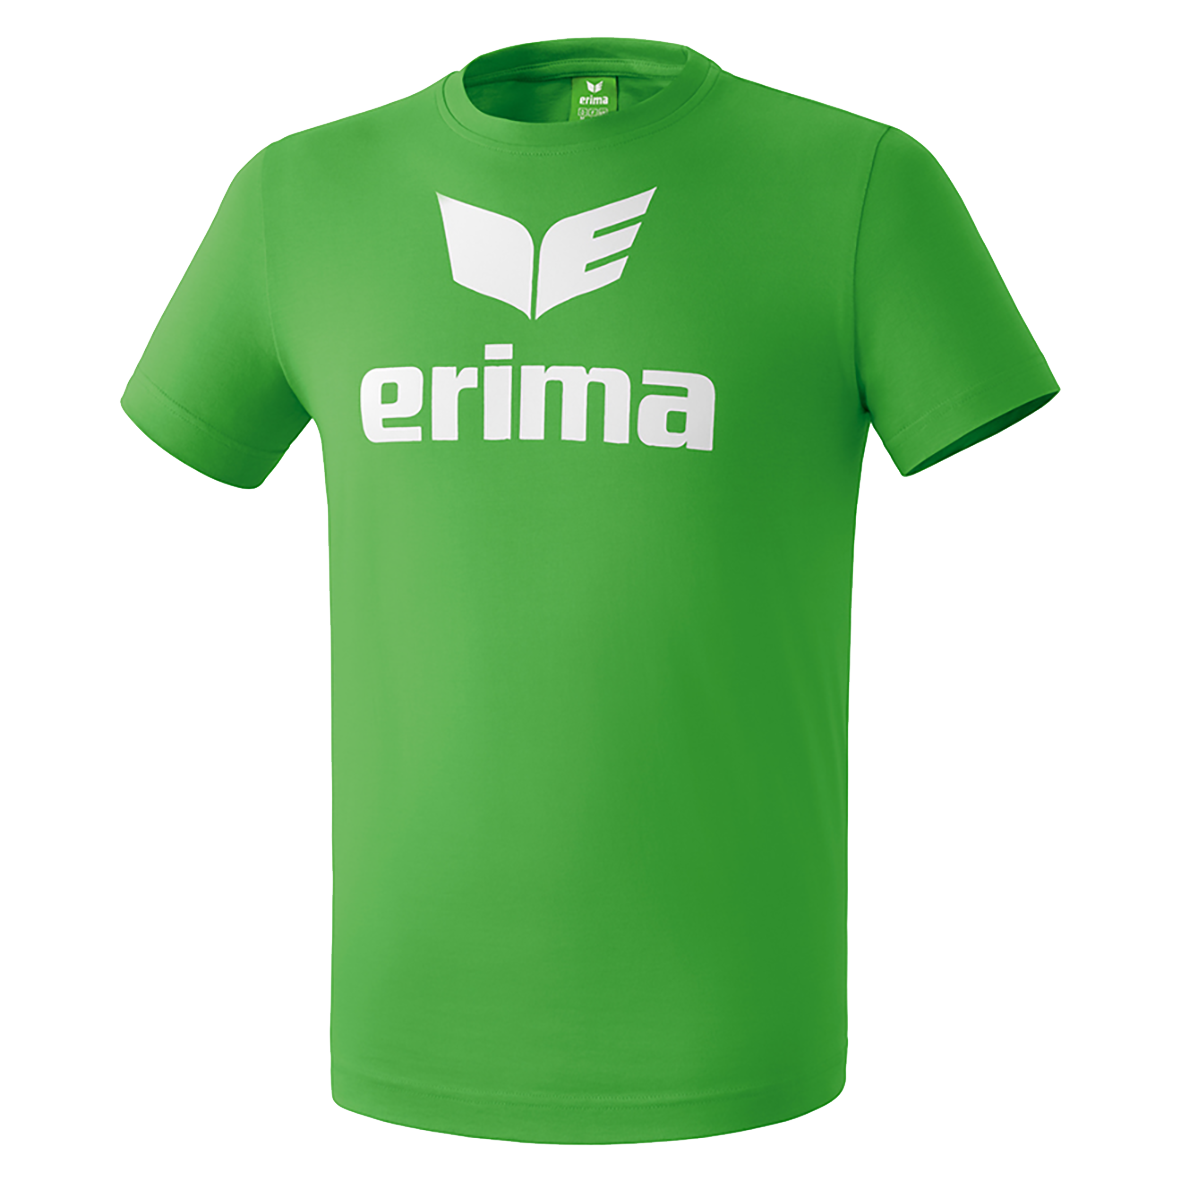 ERIMA PROMO T-SHIRT, GREEN MAN.